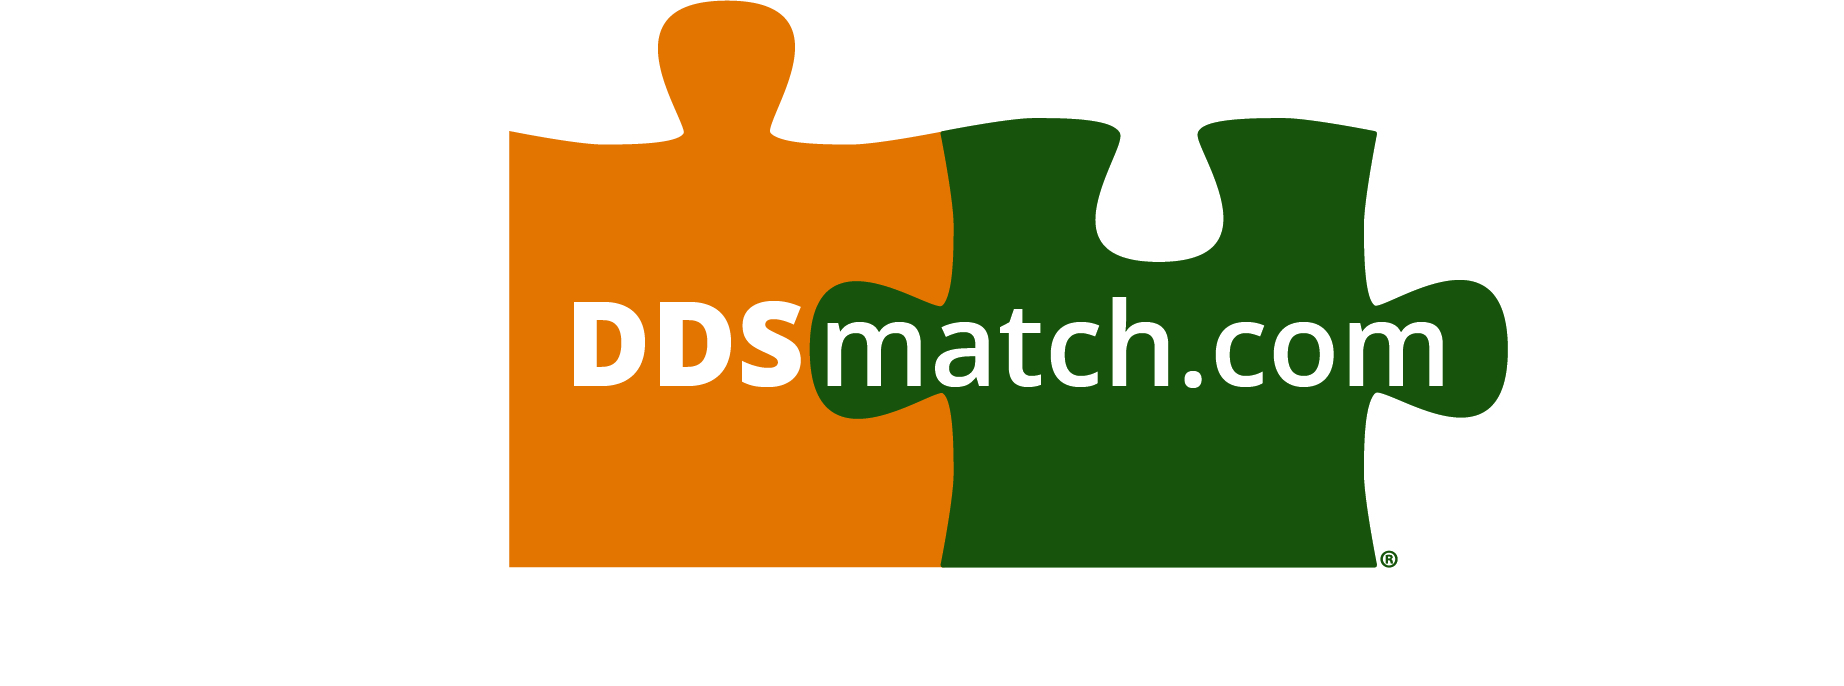 ddsmatch.com - Carey Lee Logo